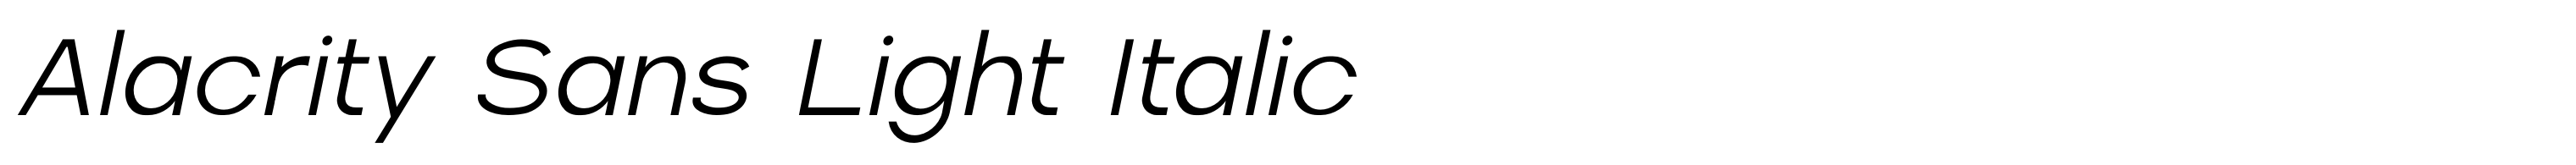 Alacrity Sans Light Italic